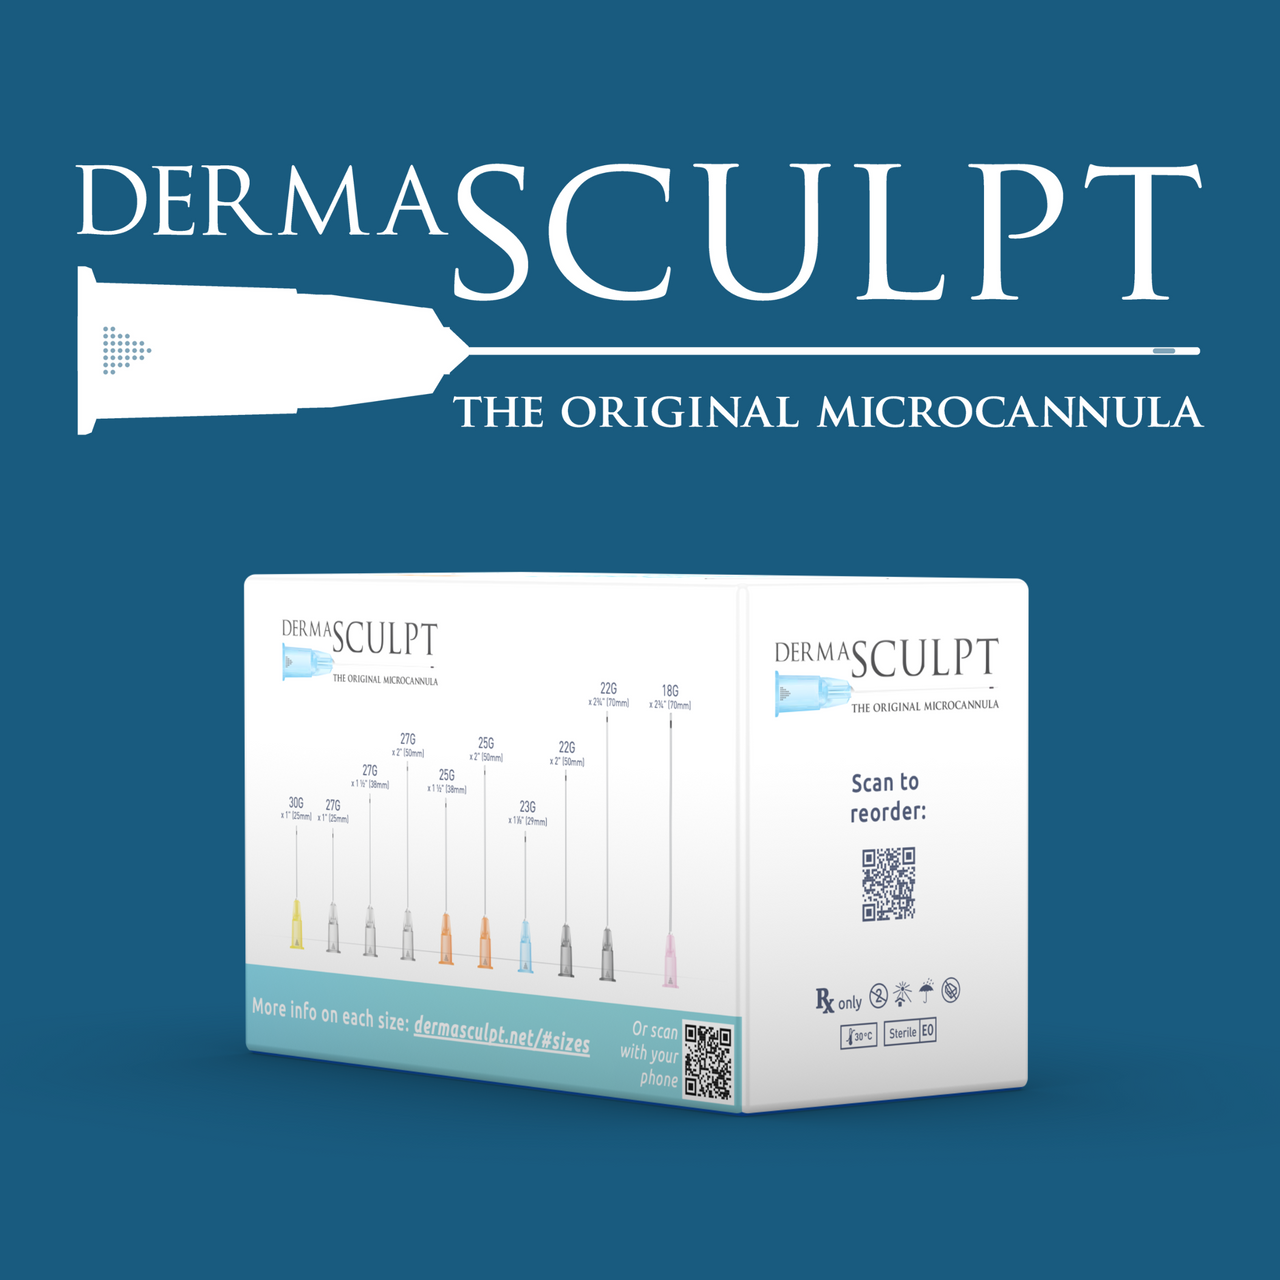 DermaSculpt - the original microcannula.